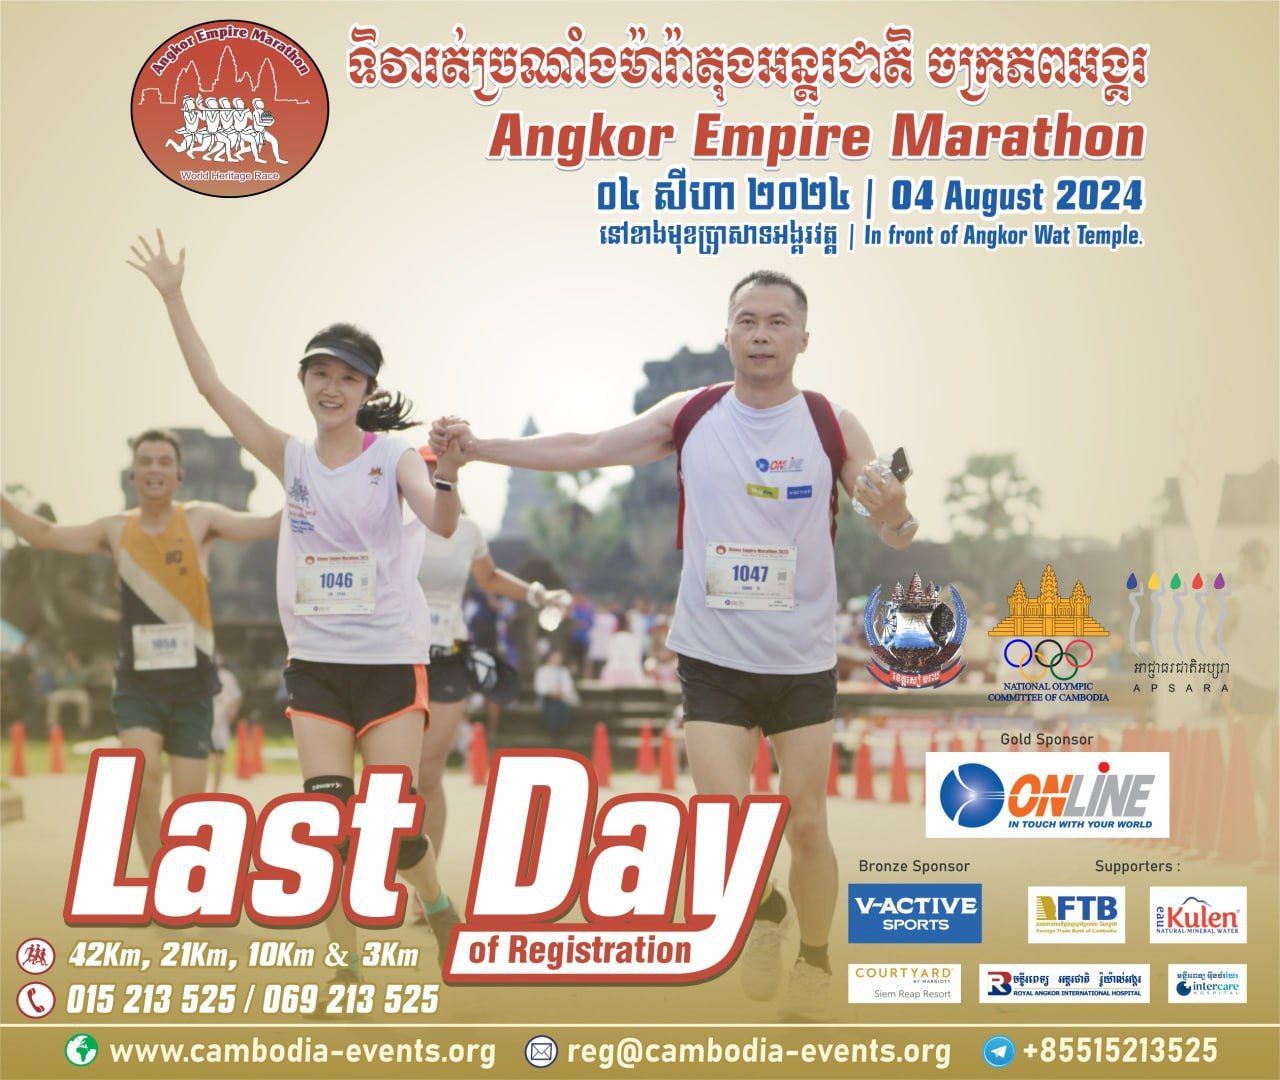 cambodia event organizer